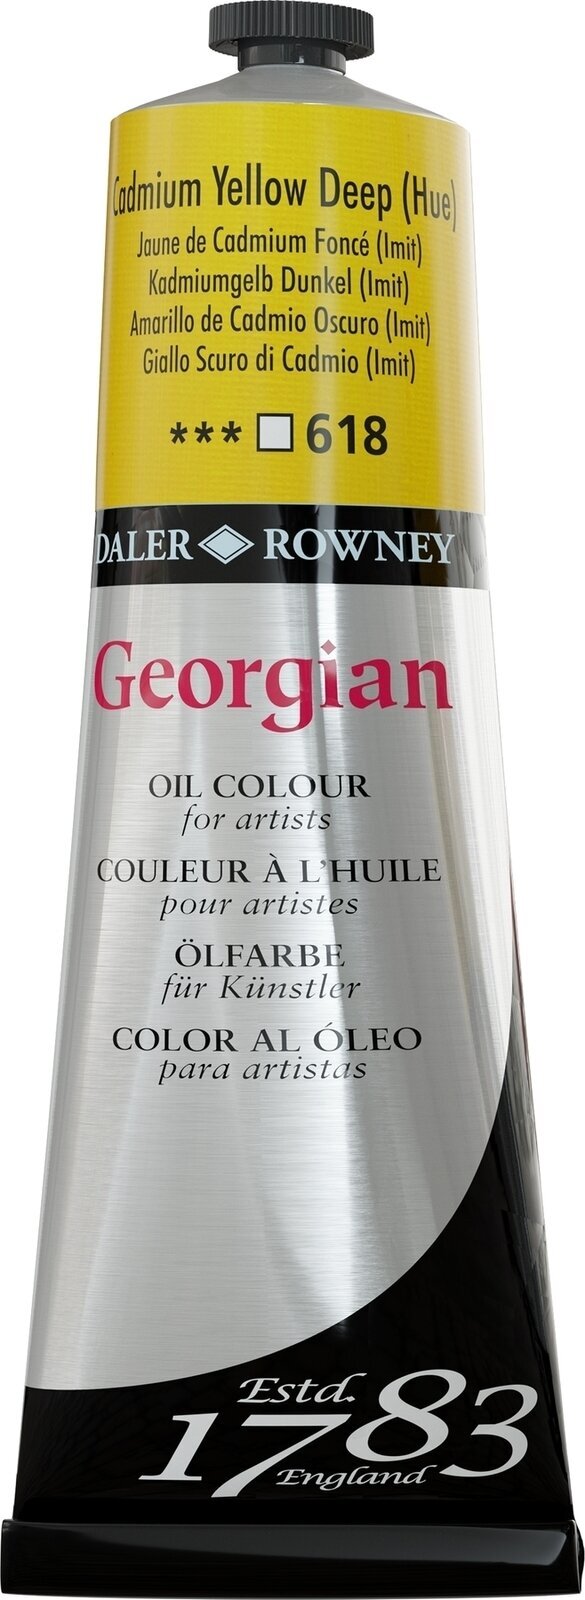 Oil colour Daler Rowney Georgian Oil Paint Cadmium Yellow Deep Hue 225 ml 1 pc